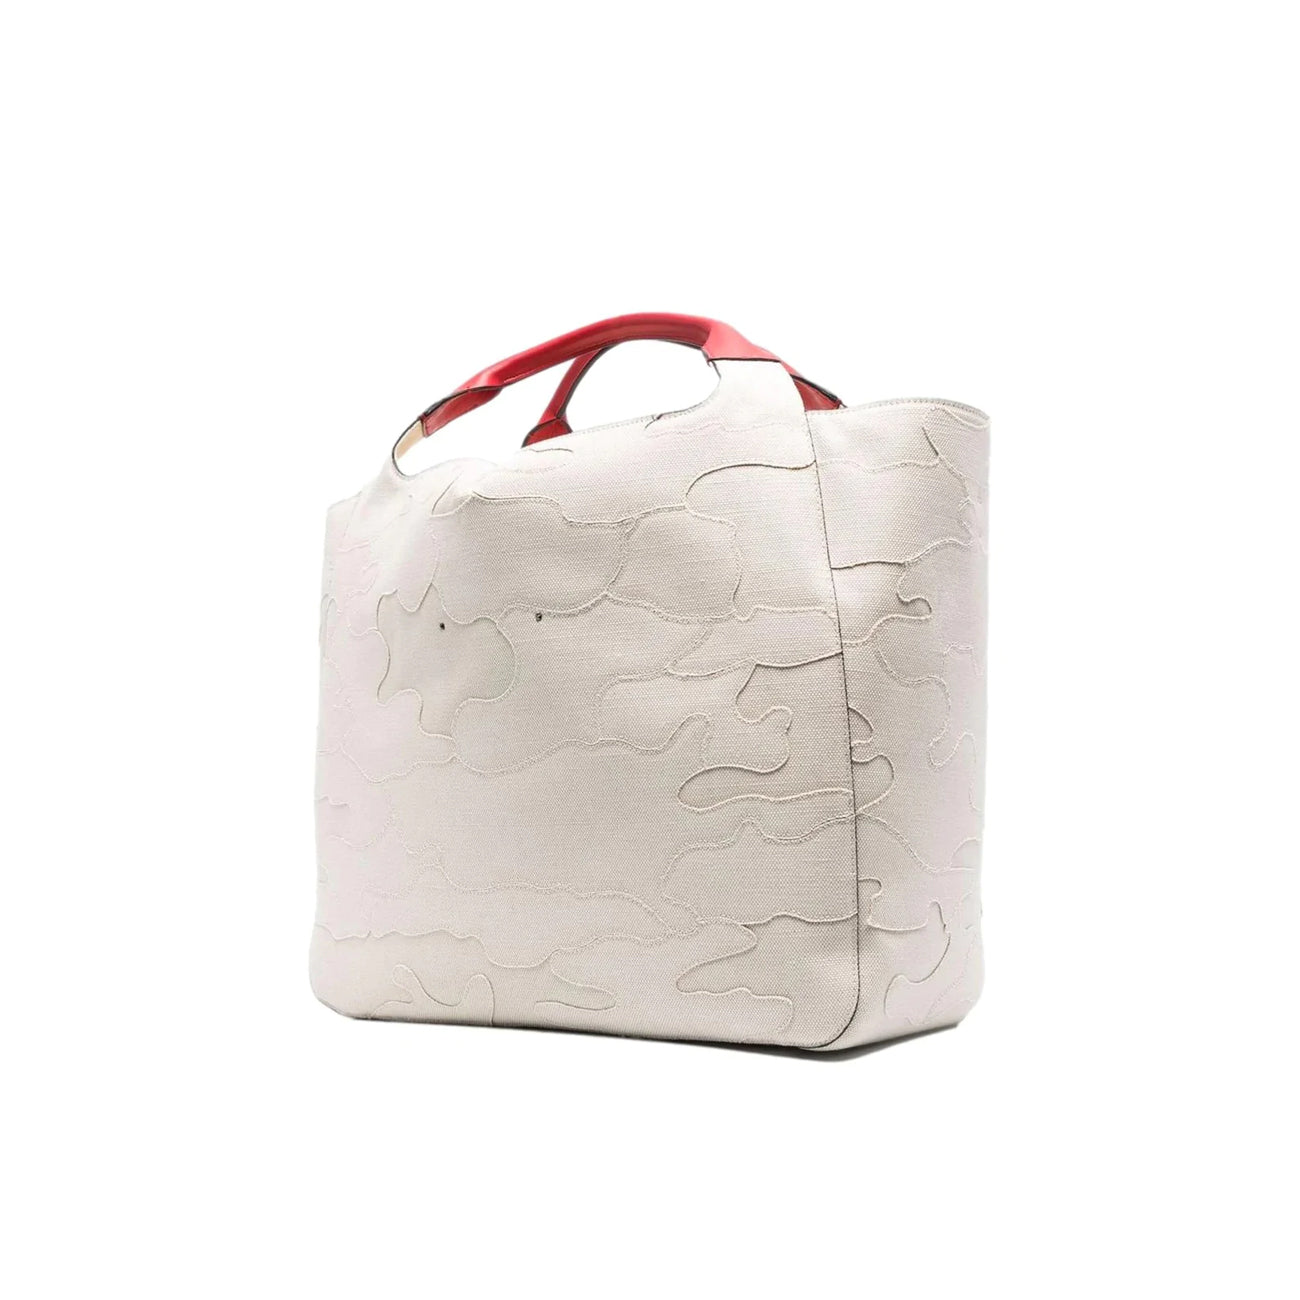 Valentino Garavani Sac Atelier 07 Edition Natural Tote Bag